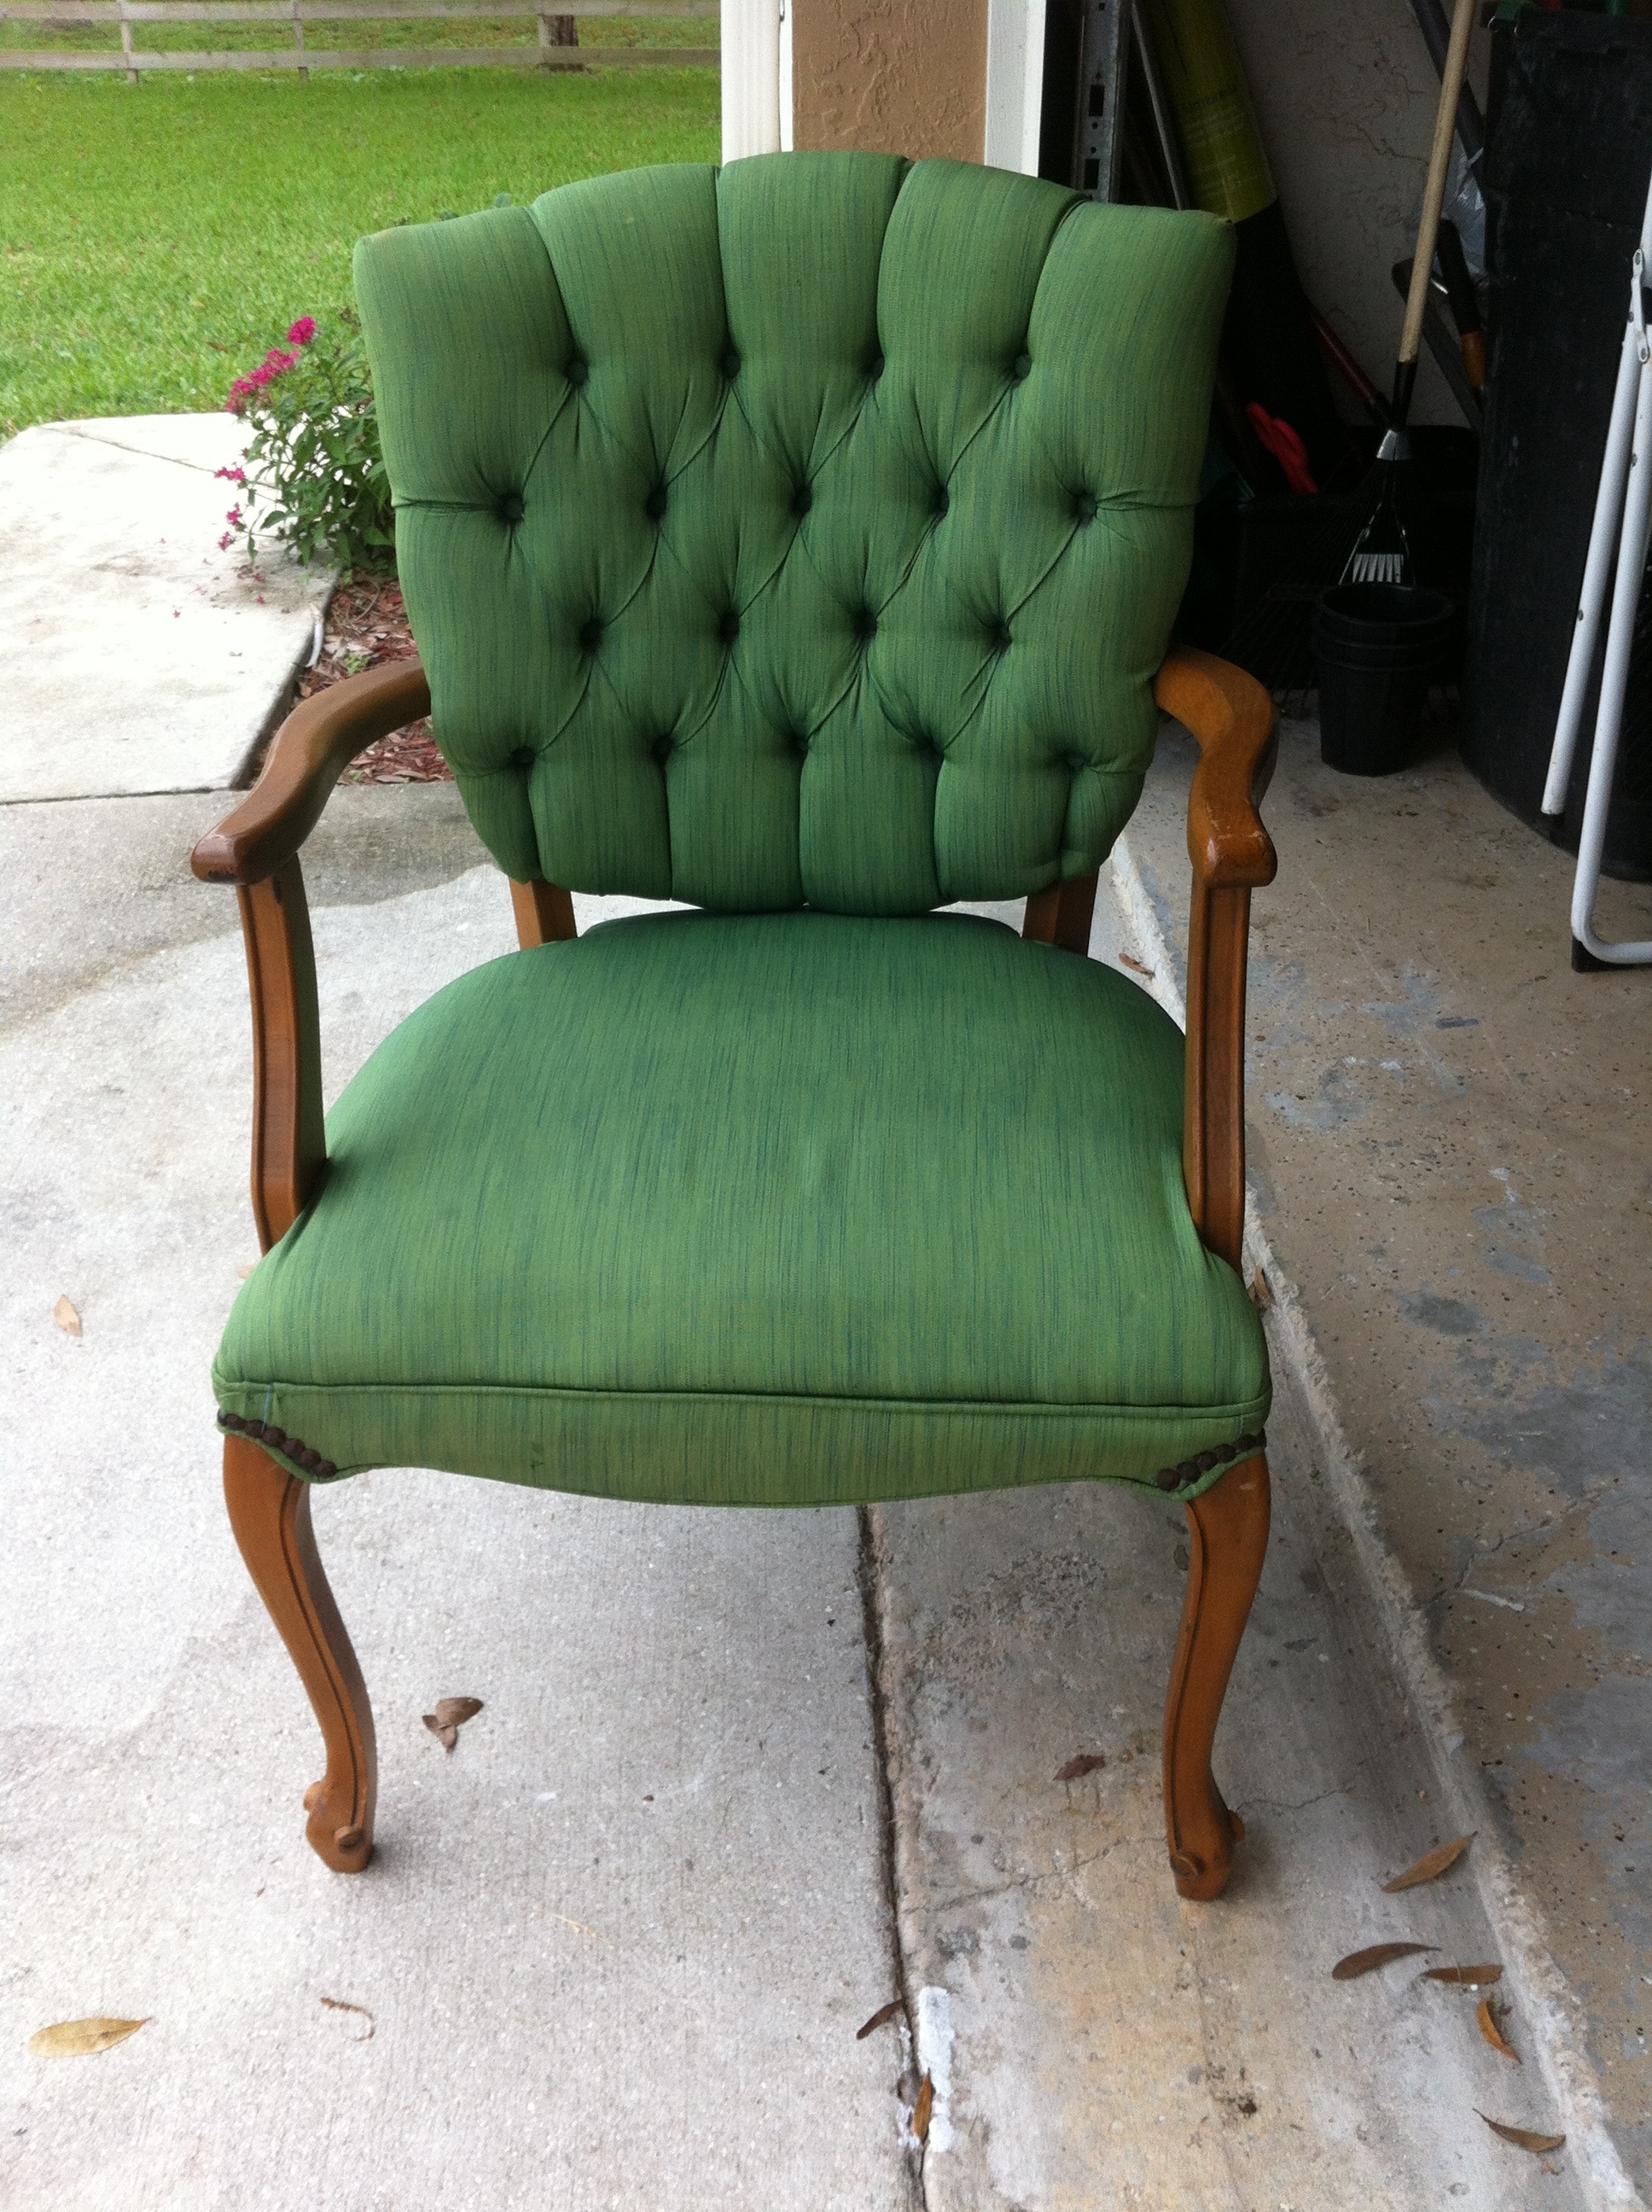 Pinterest Addict - Tulip Fabric Spray Paint Chair - Pinterest Addict